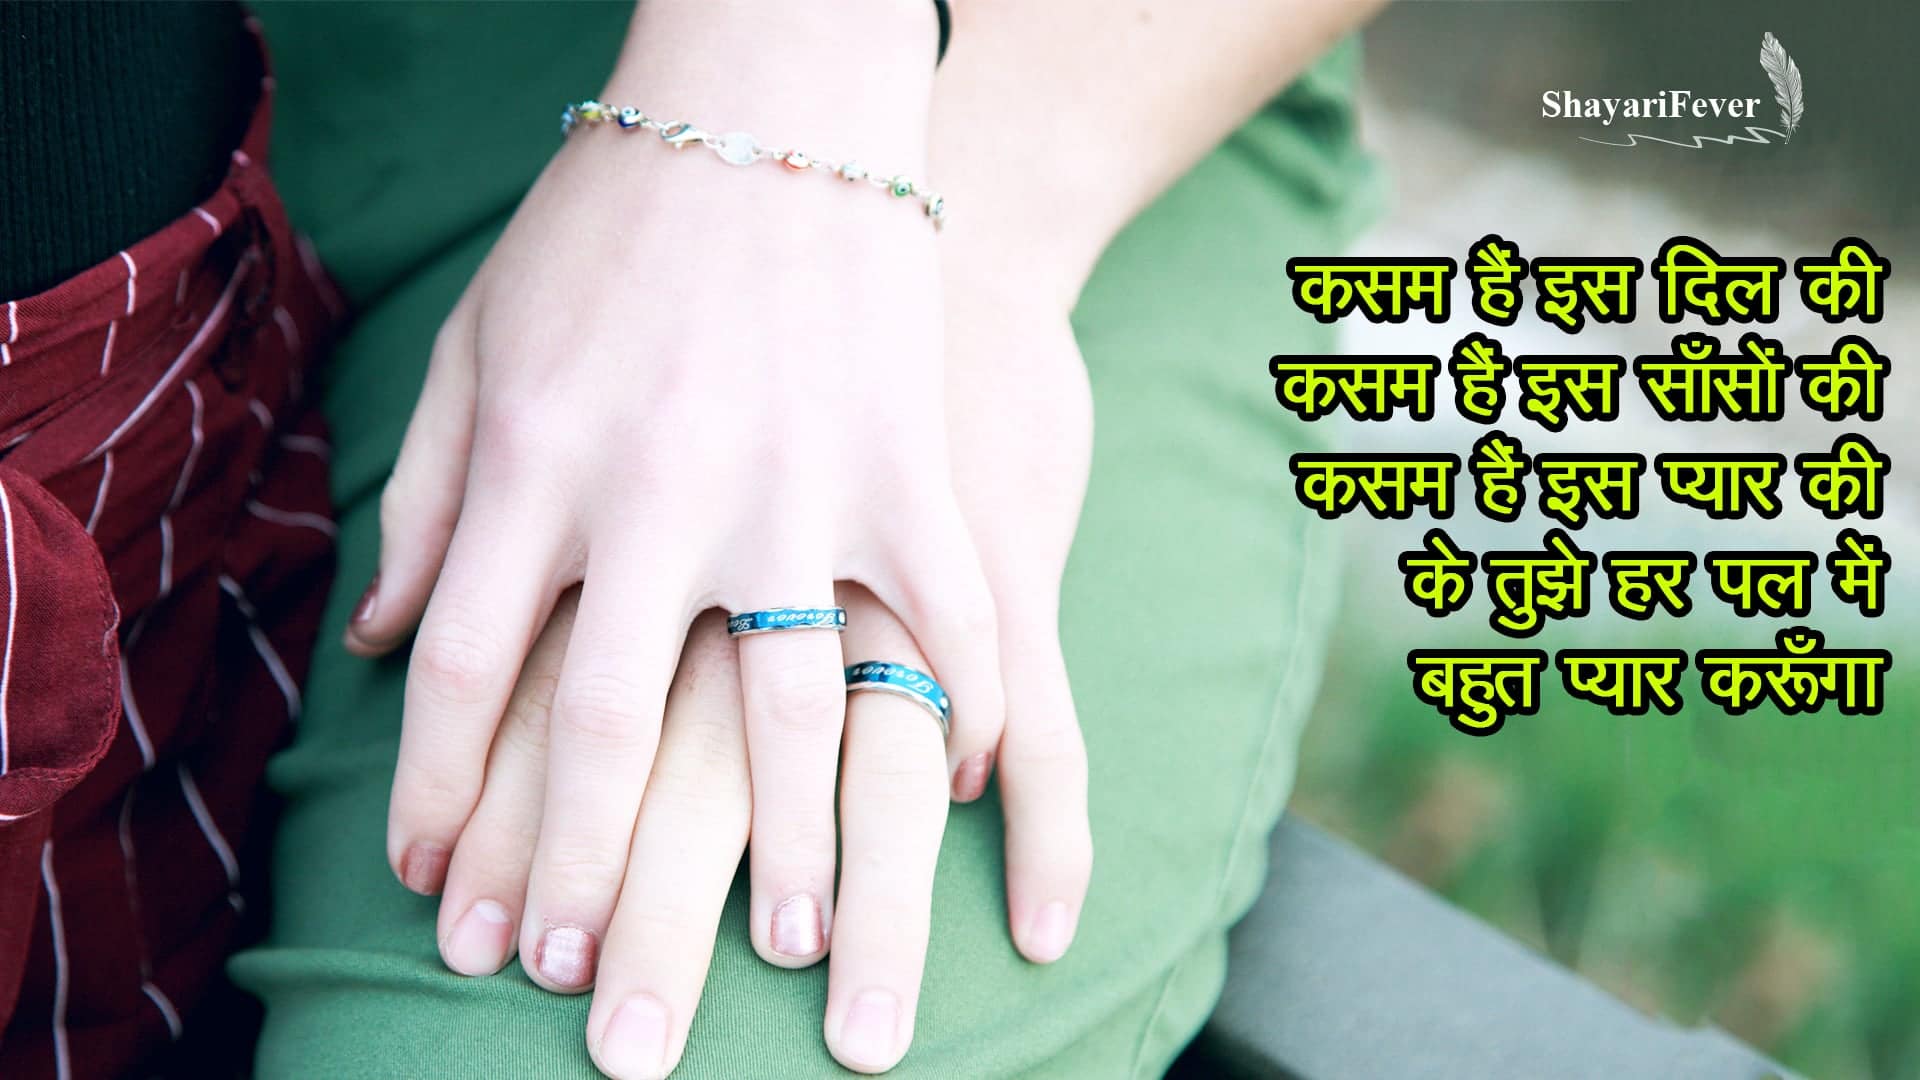 Promise Day Shayari In Hindi